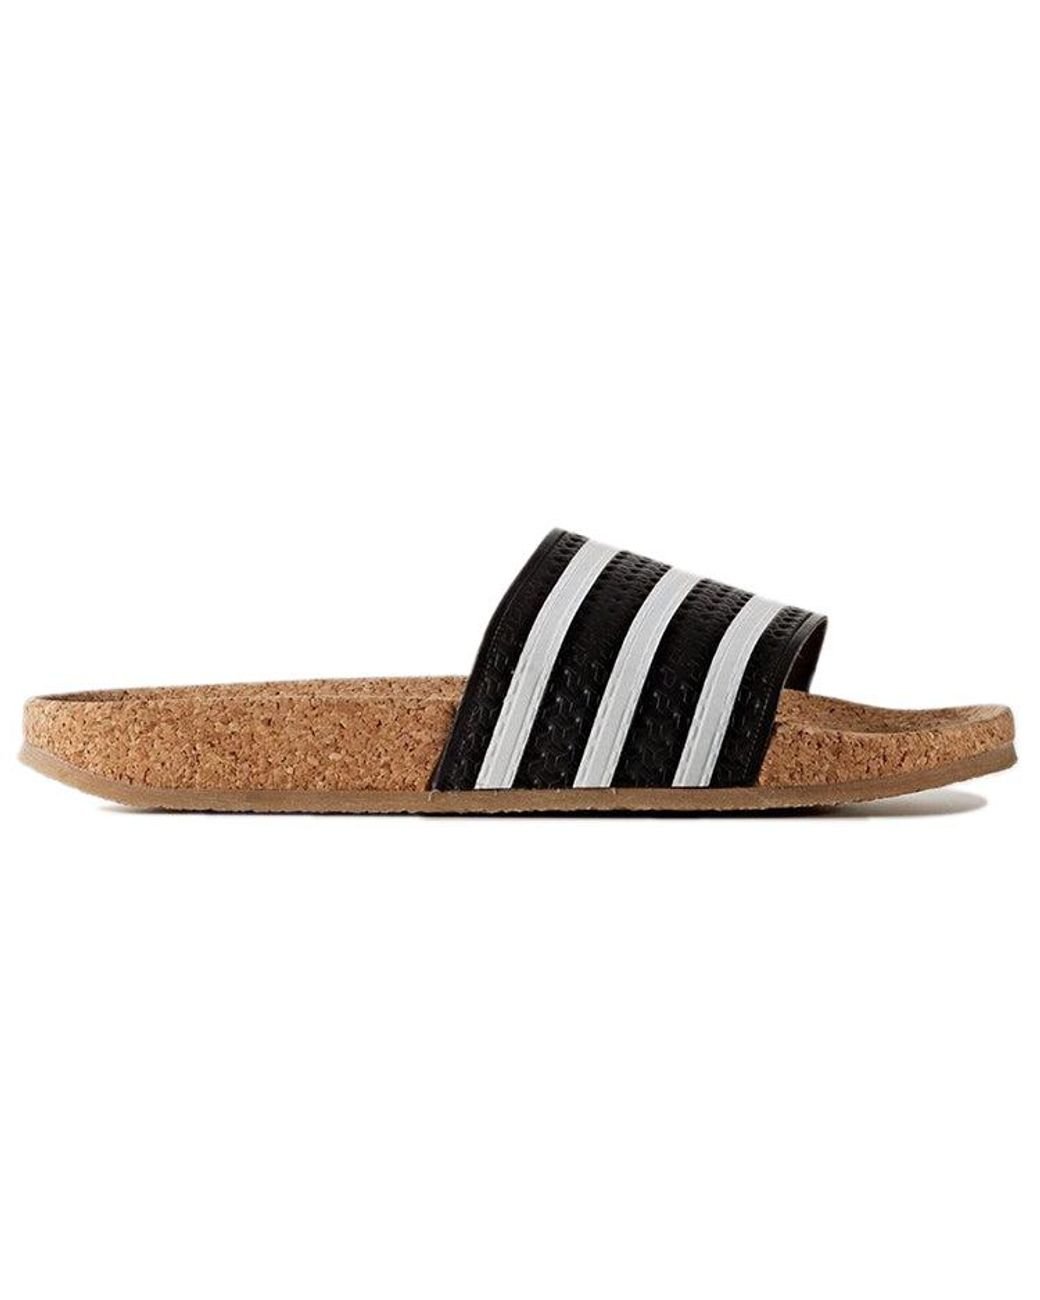 adidas Originals Adilette Cork Slippers Black/white in Brown | Lyst